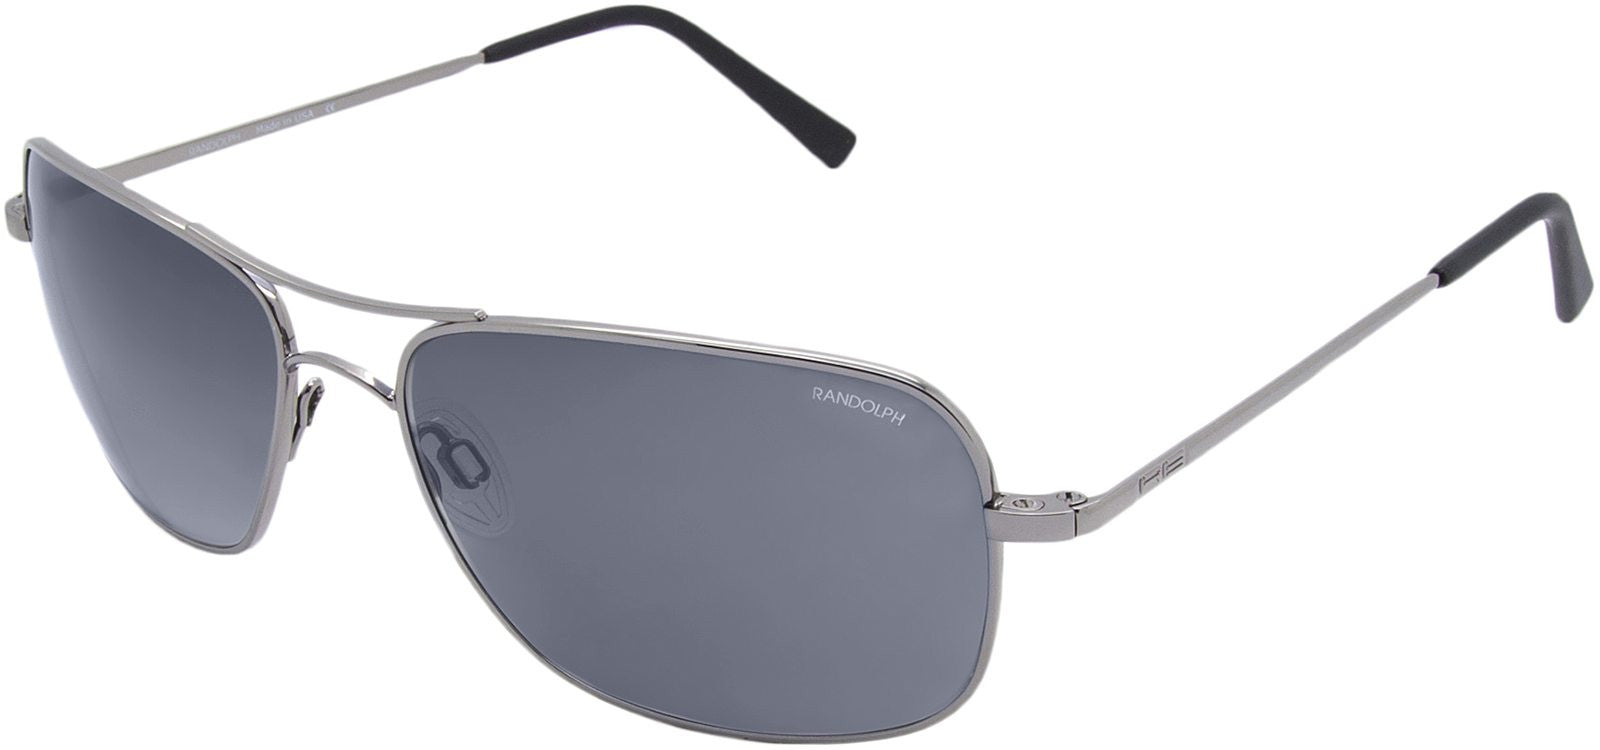 Randolph Archer Sunglasses ARTF434-NY Dark Ruthenium, American Gray  Polarized - Flight Sunglasses